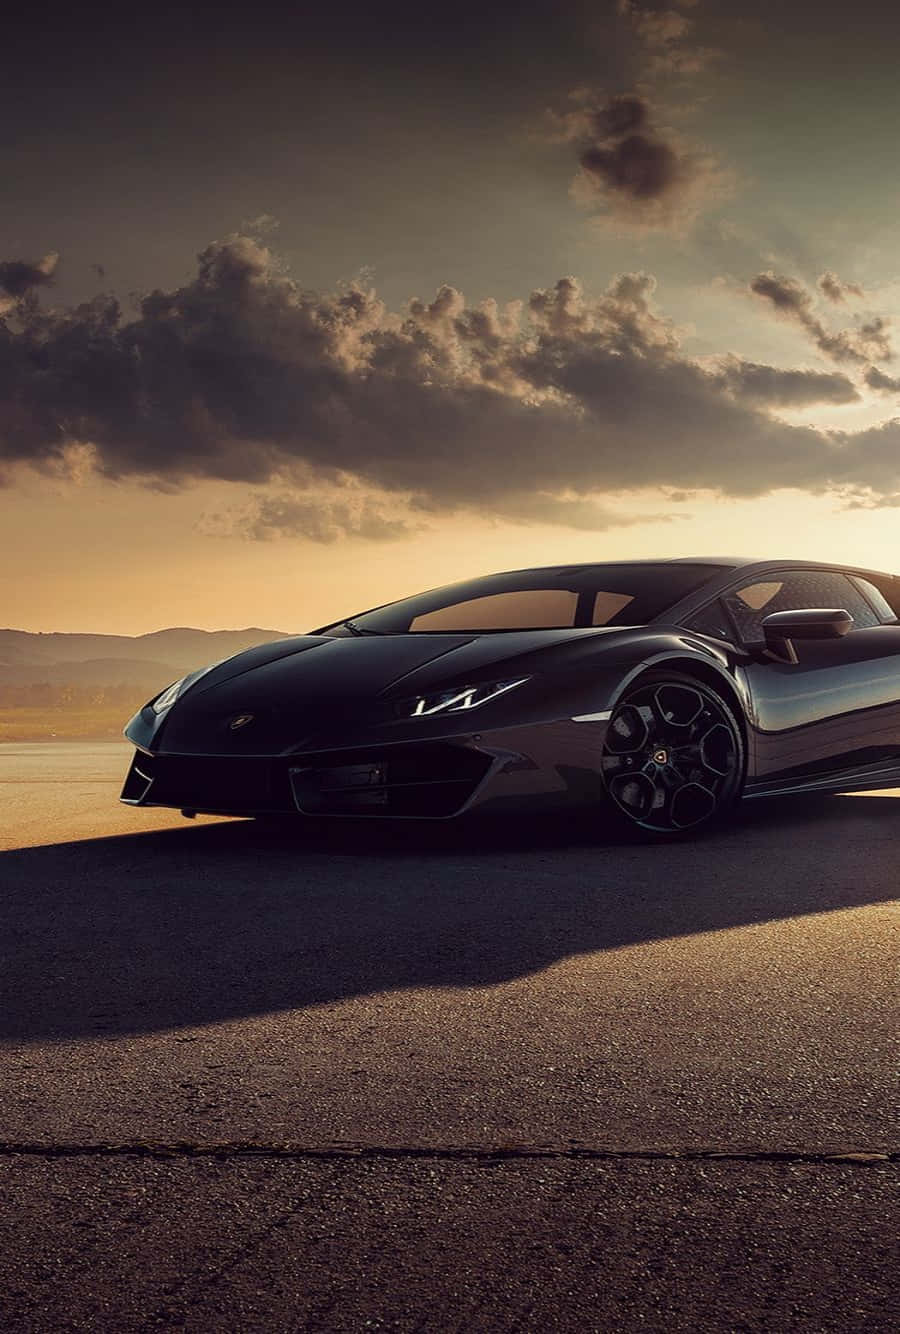 "Luxurious Black Lamborghini iPhone" Wallpaper